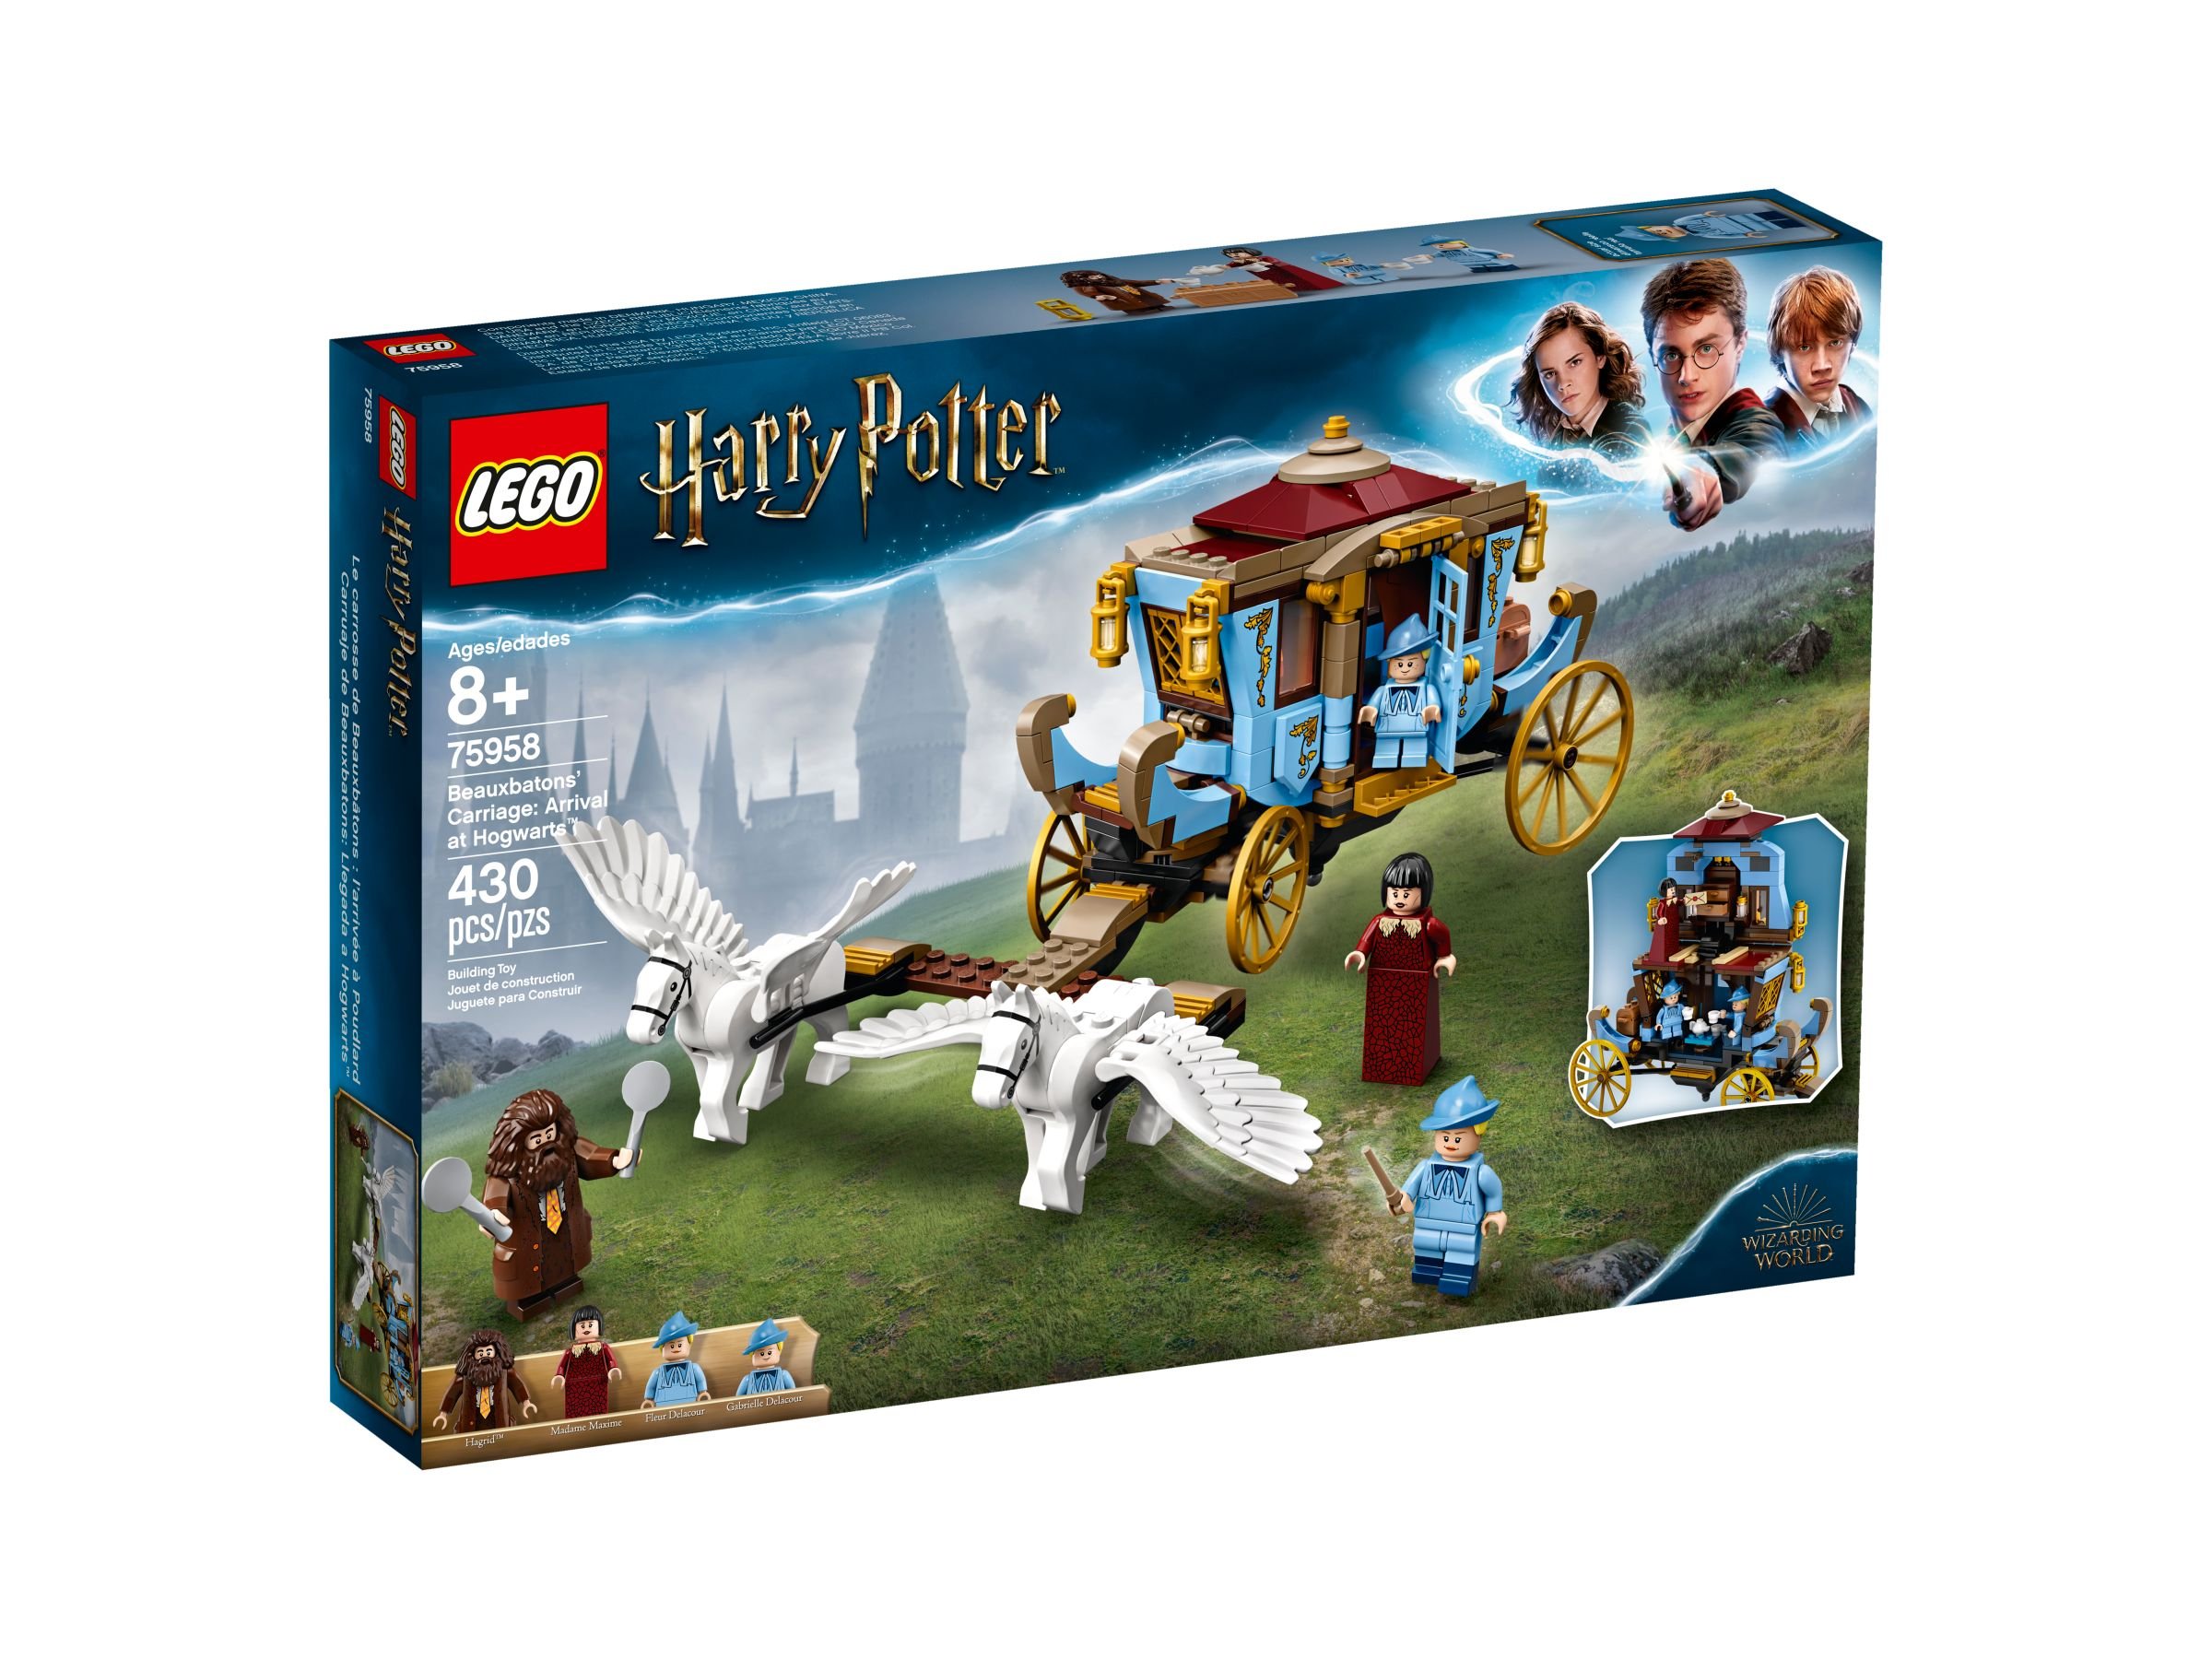 LEGO Harry Potter 75958 Beauxbatons Kutsche LEGO_75958_alt1.jpg